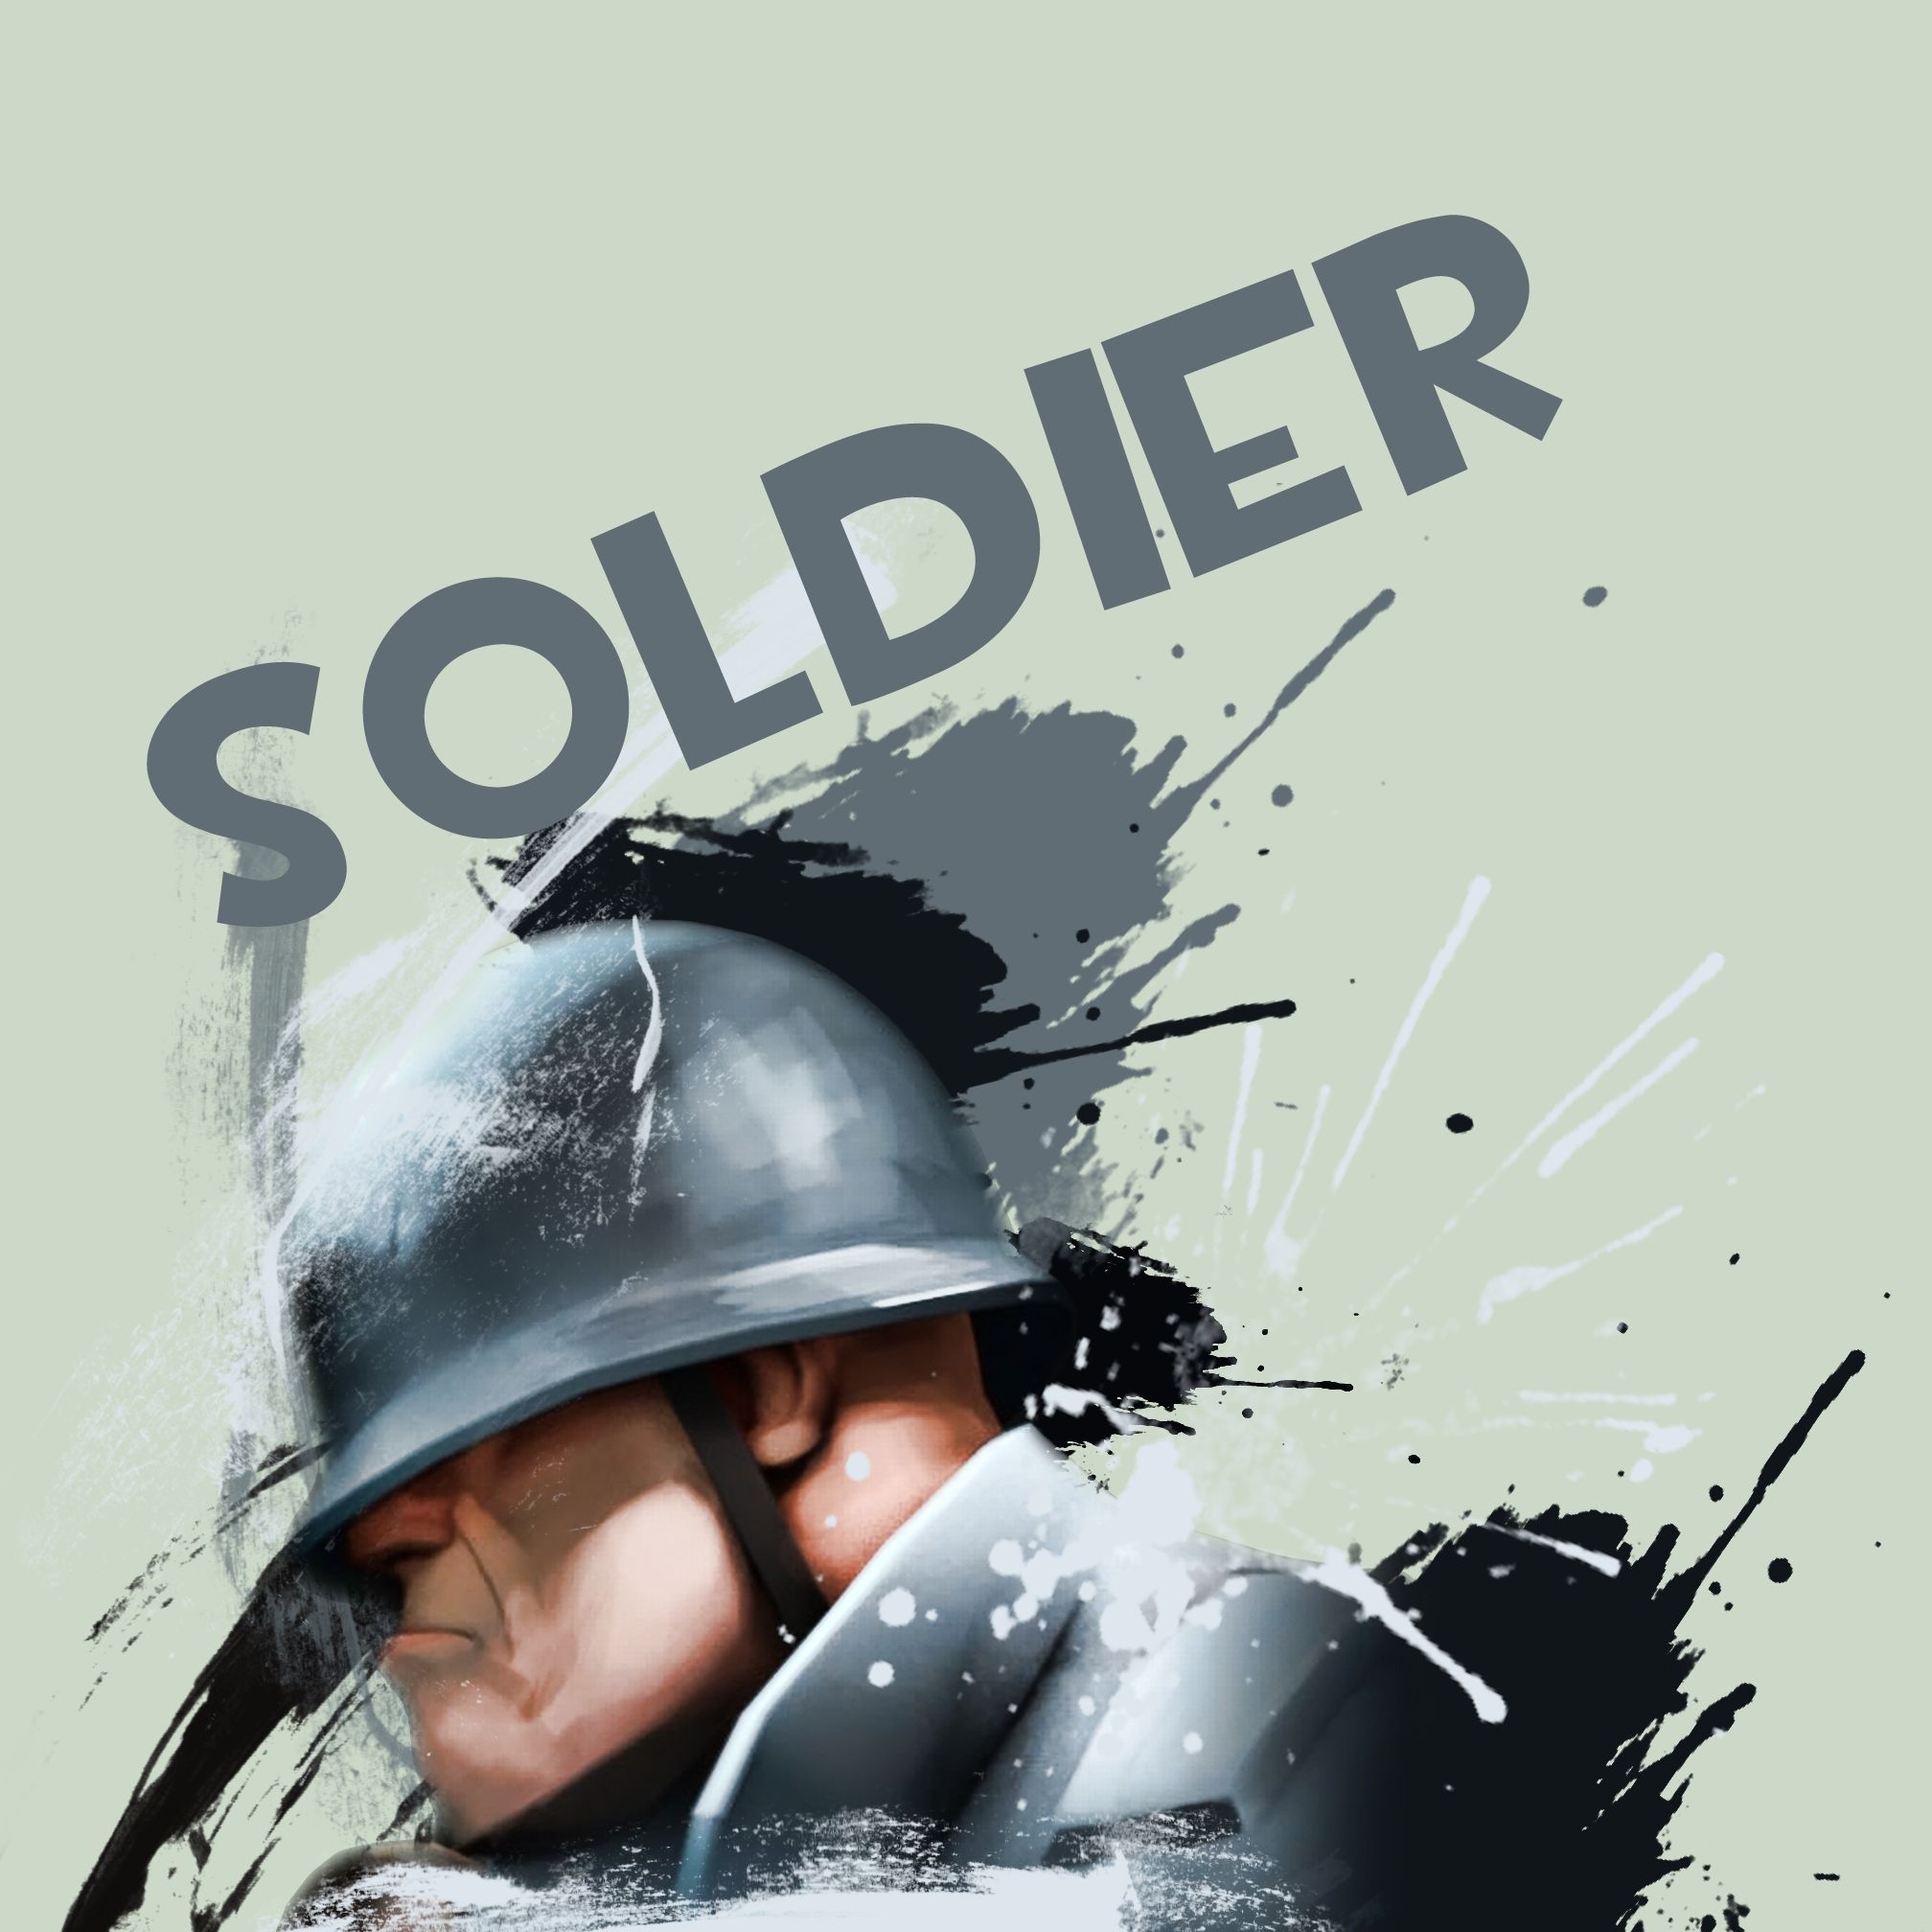 TF2 Soldier Wallpaper